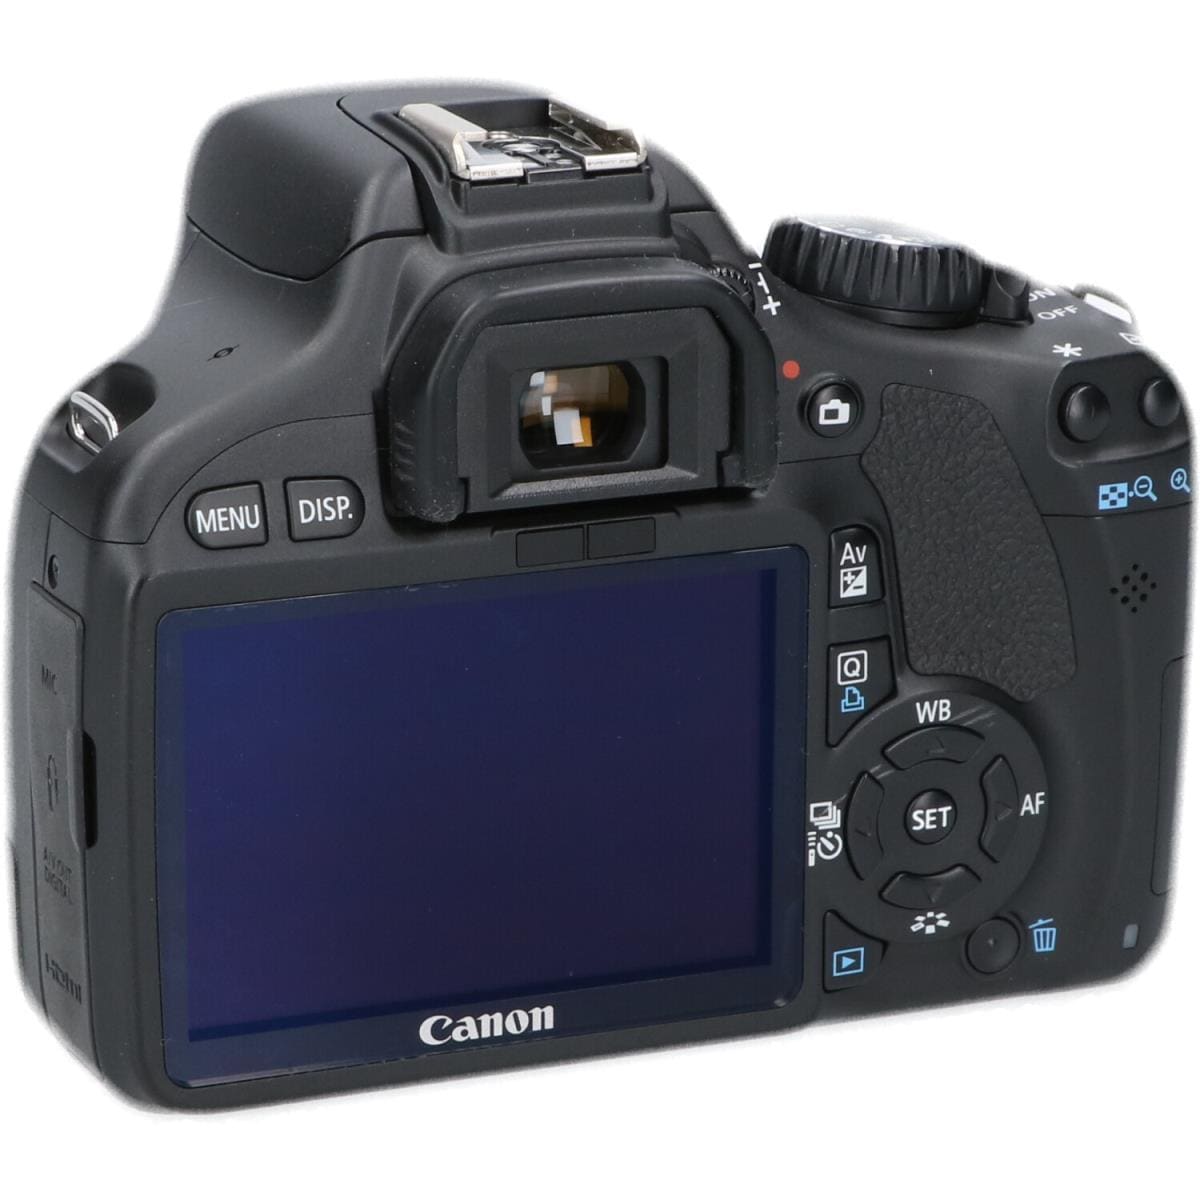 KOMEHYO|CANON EOS KISS X4|Canon|Camera|Digital SLR|【Official